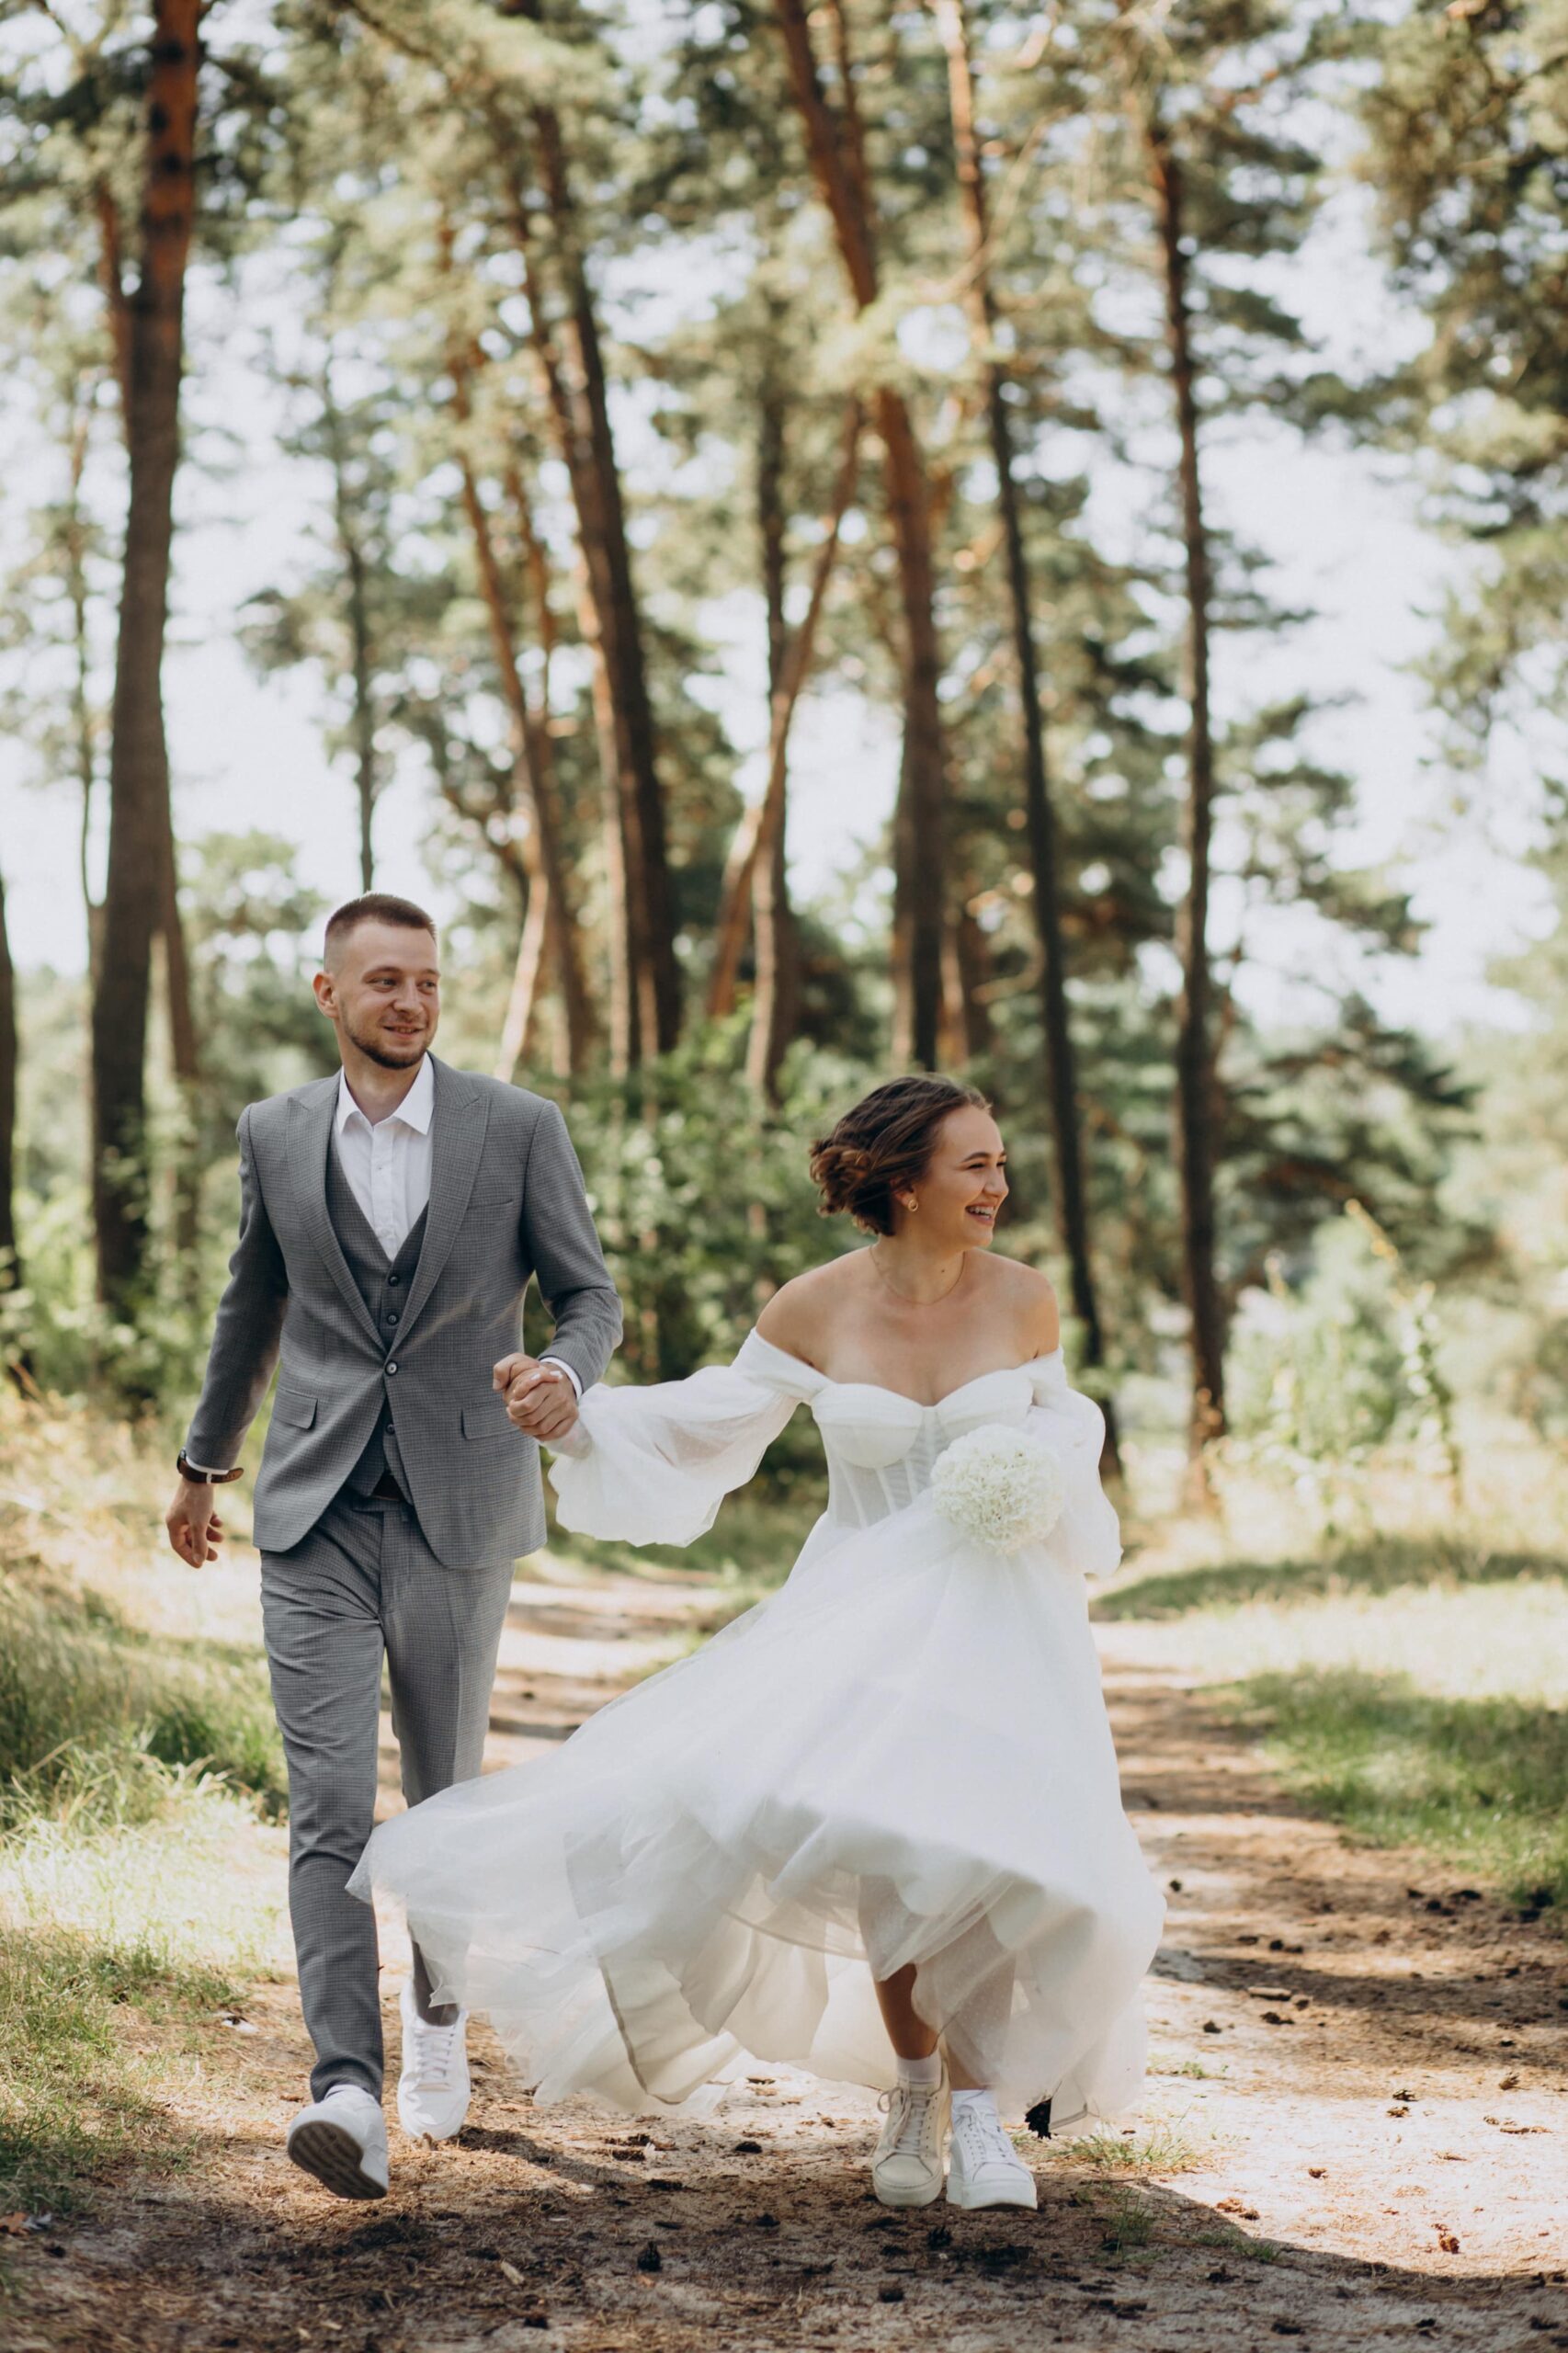 groom-bride-their-wedding-day-forest-min